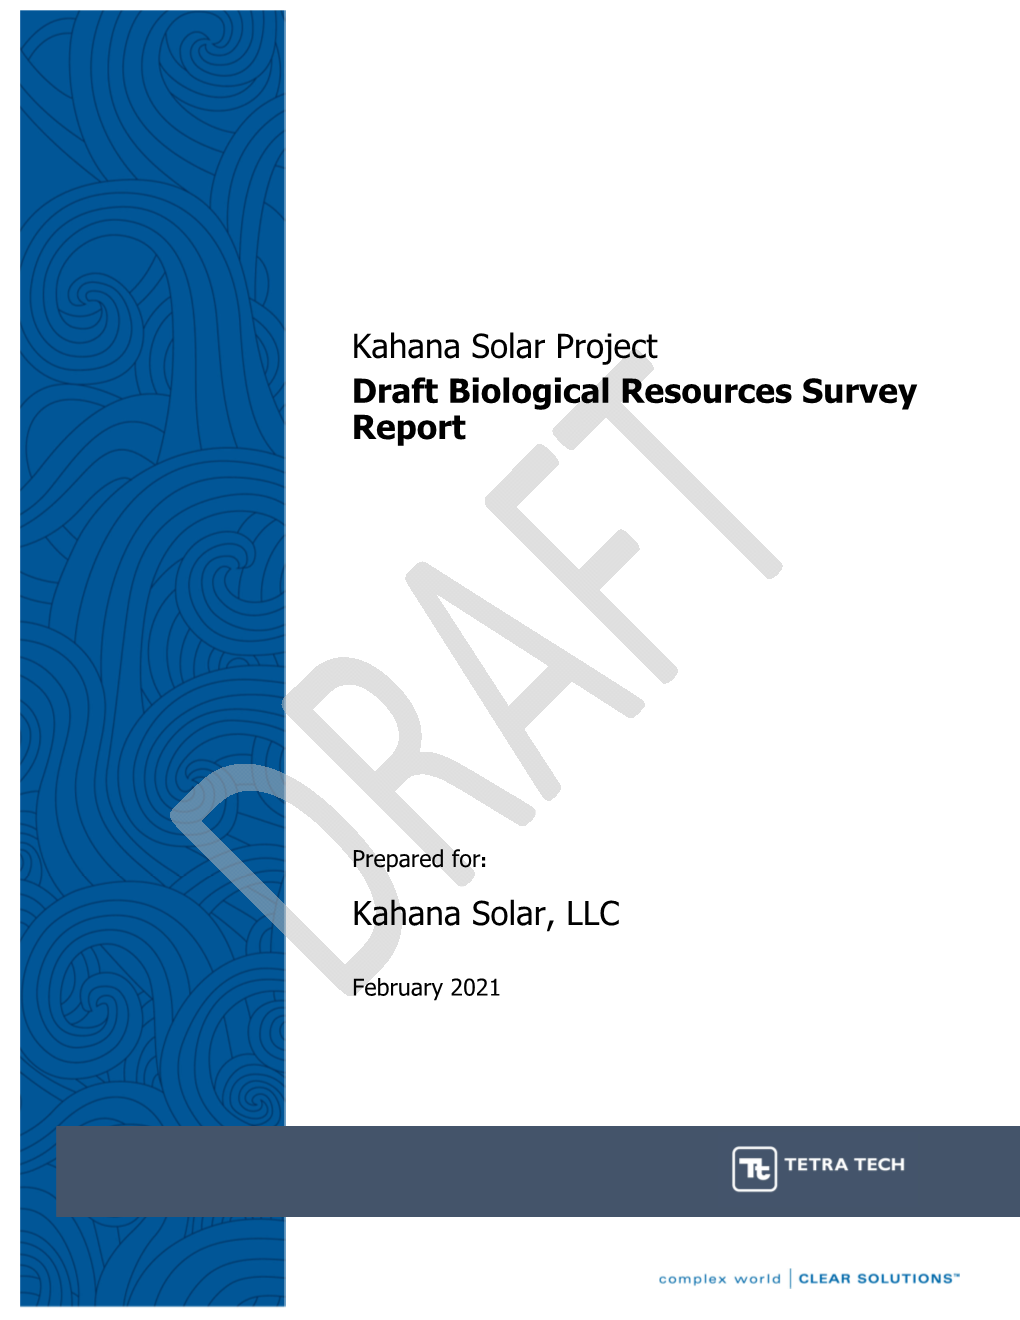 Draft Biological Resources Survey Report